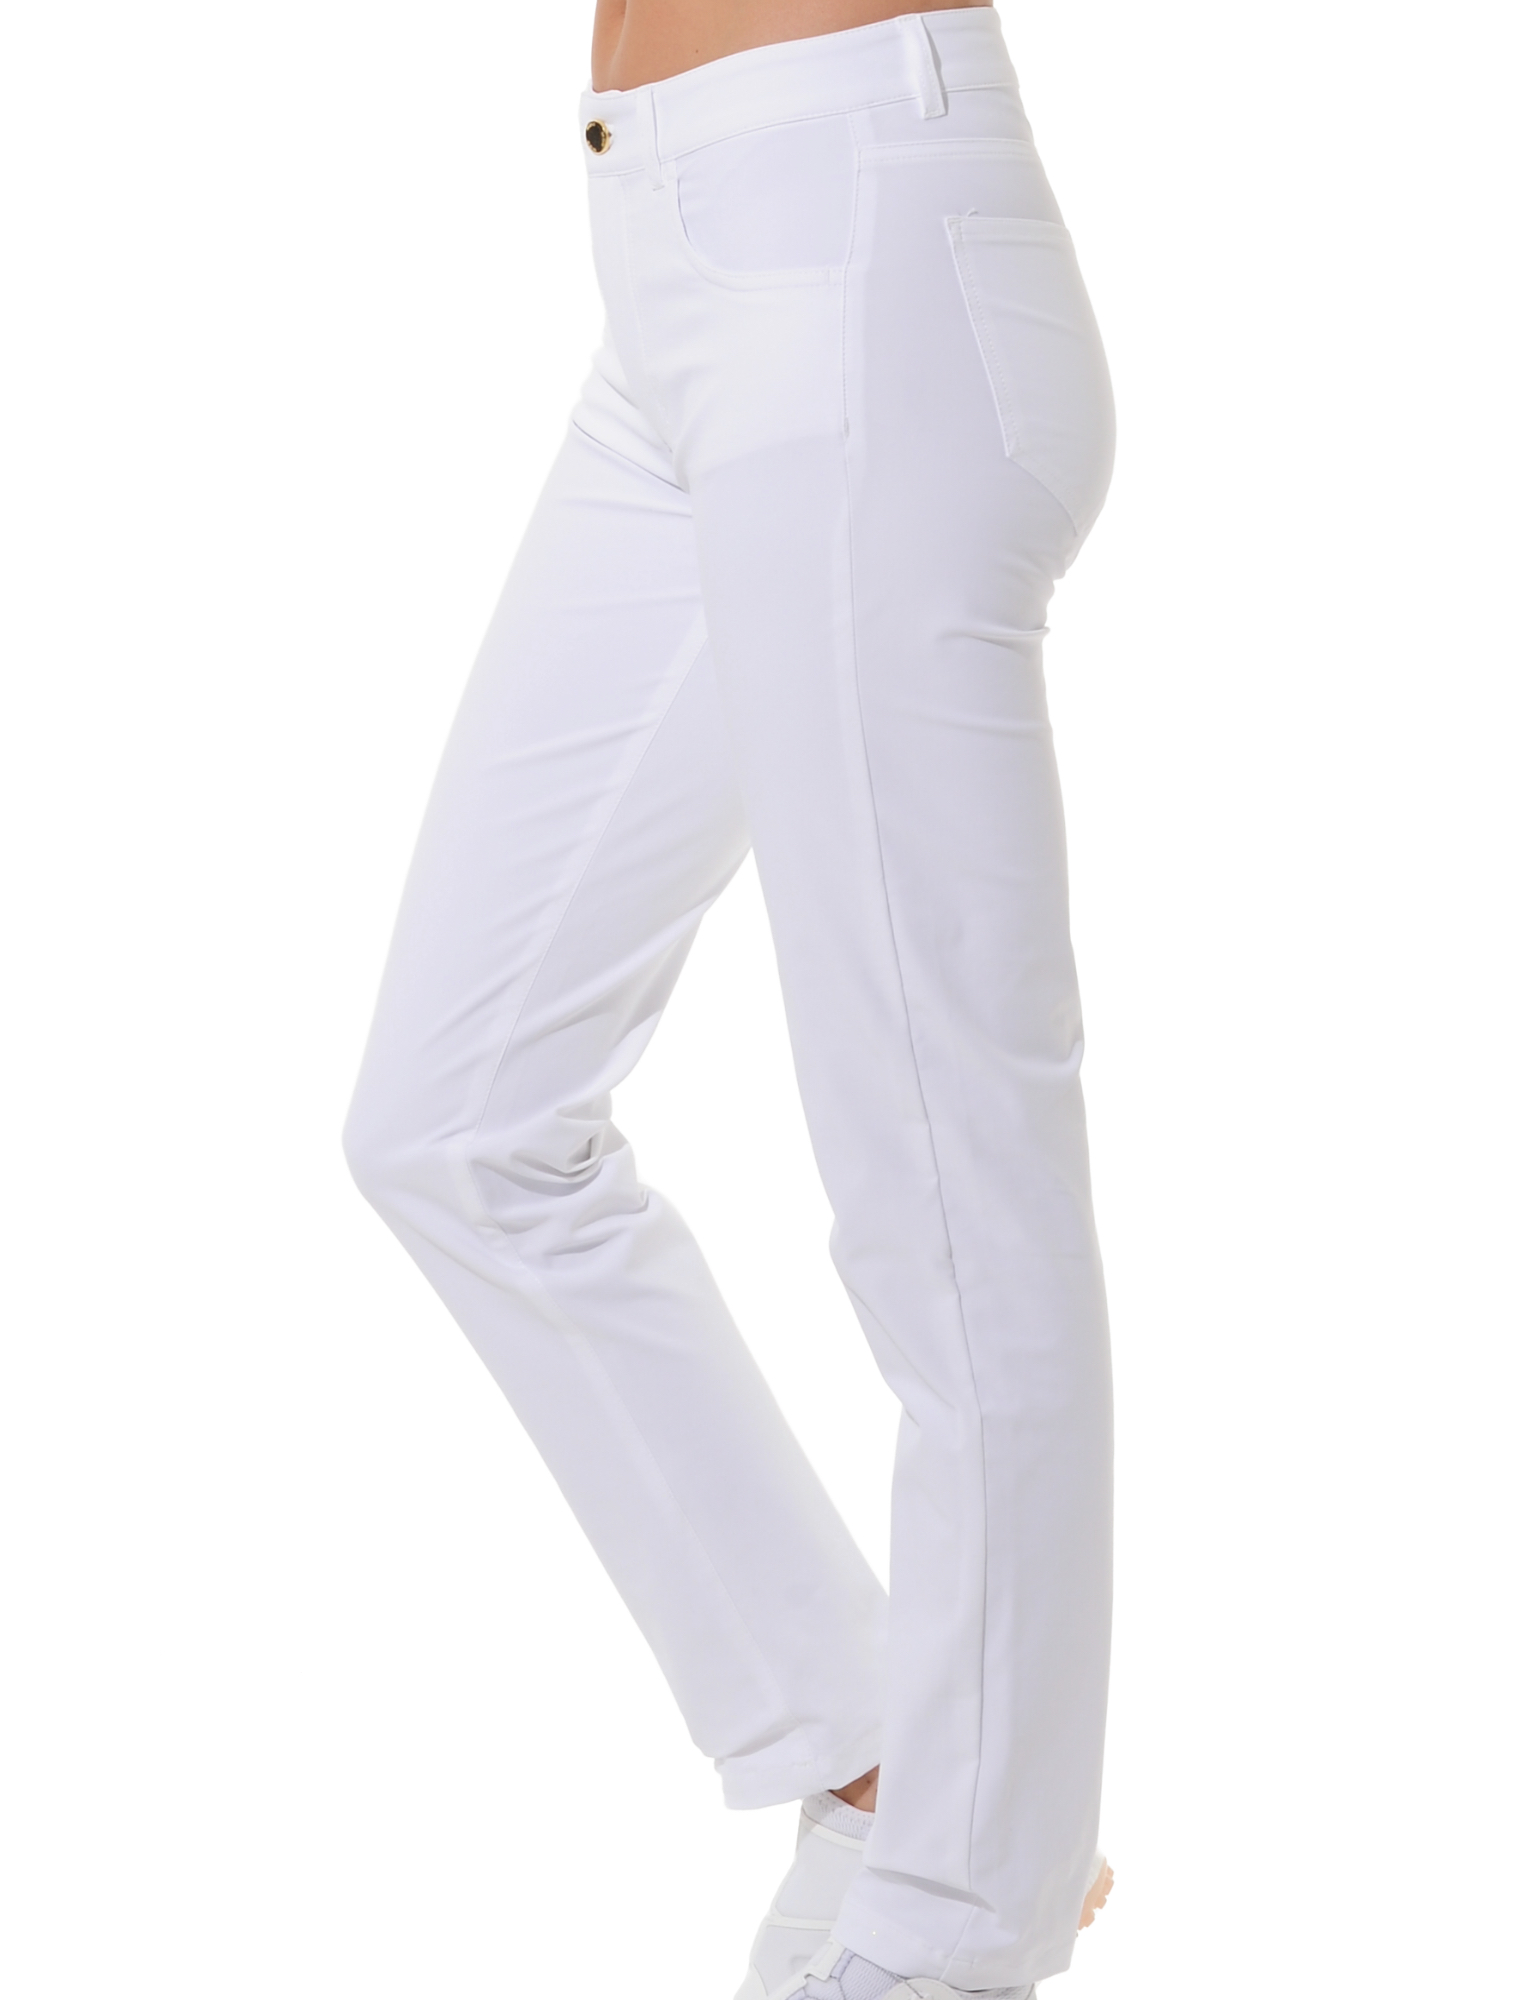 4way stretch long straight cut pants white